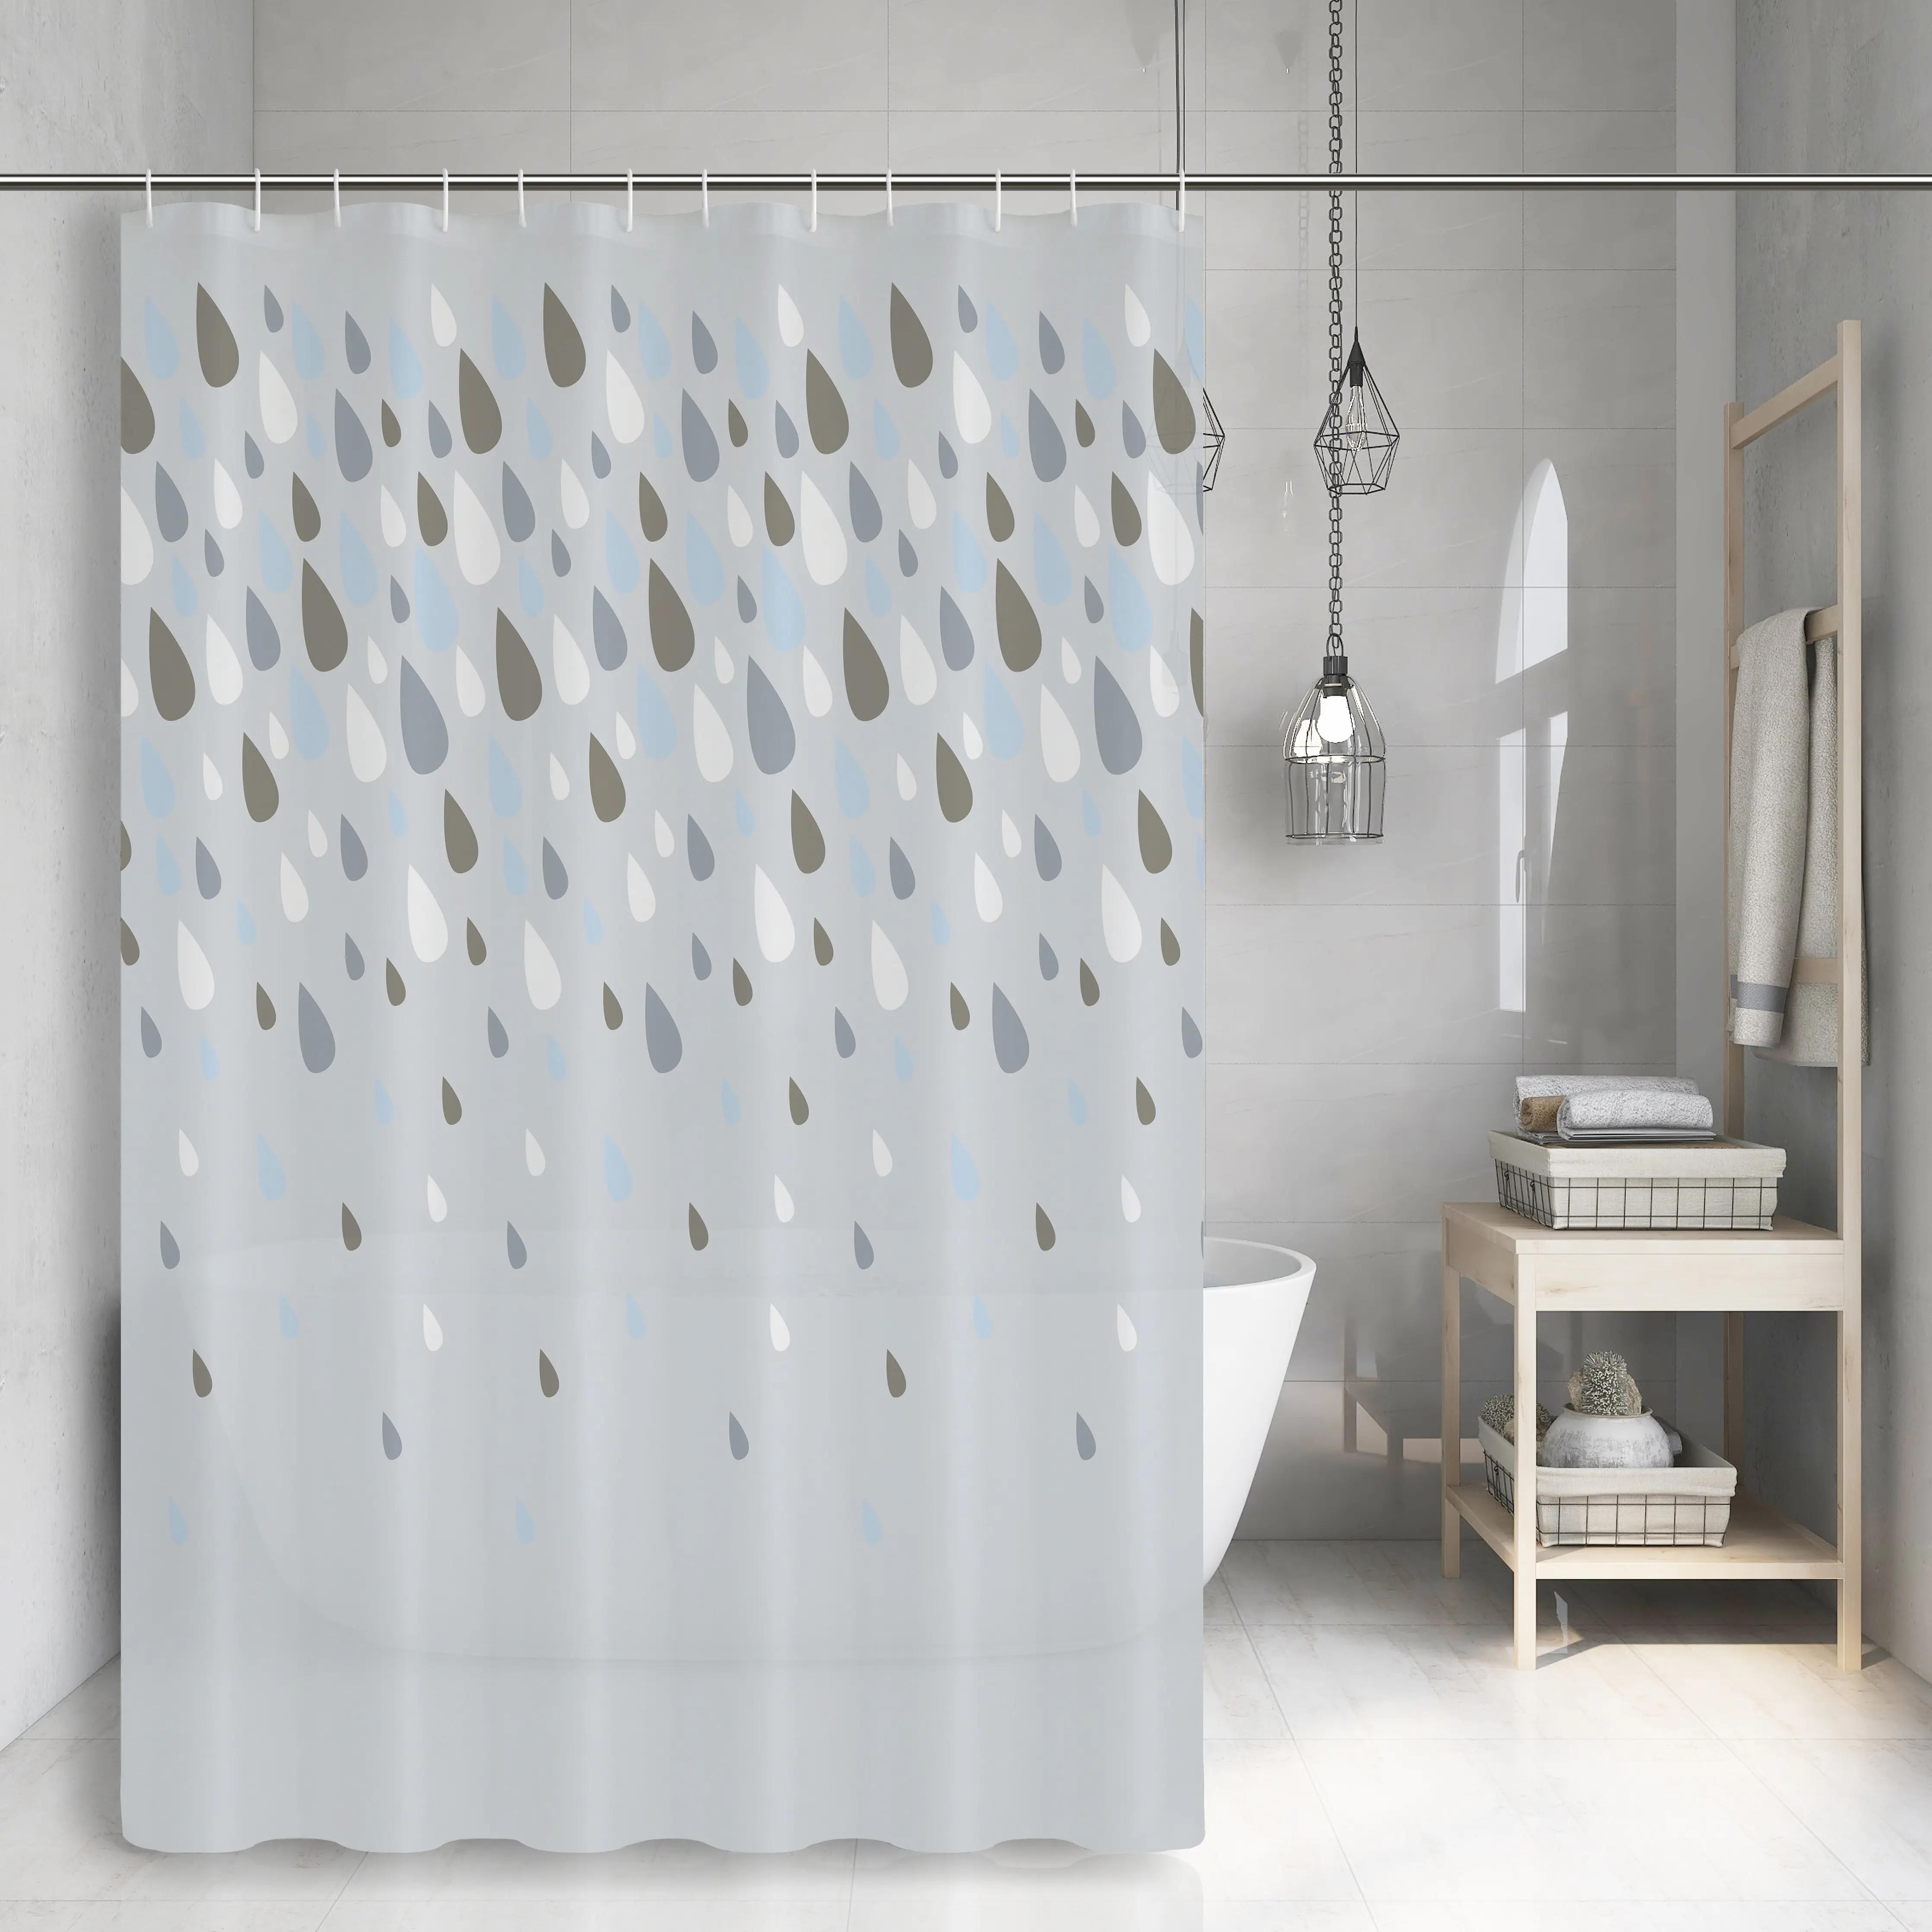 Heavy duty Printed PEVA shower curtain